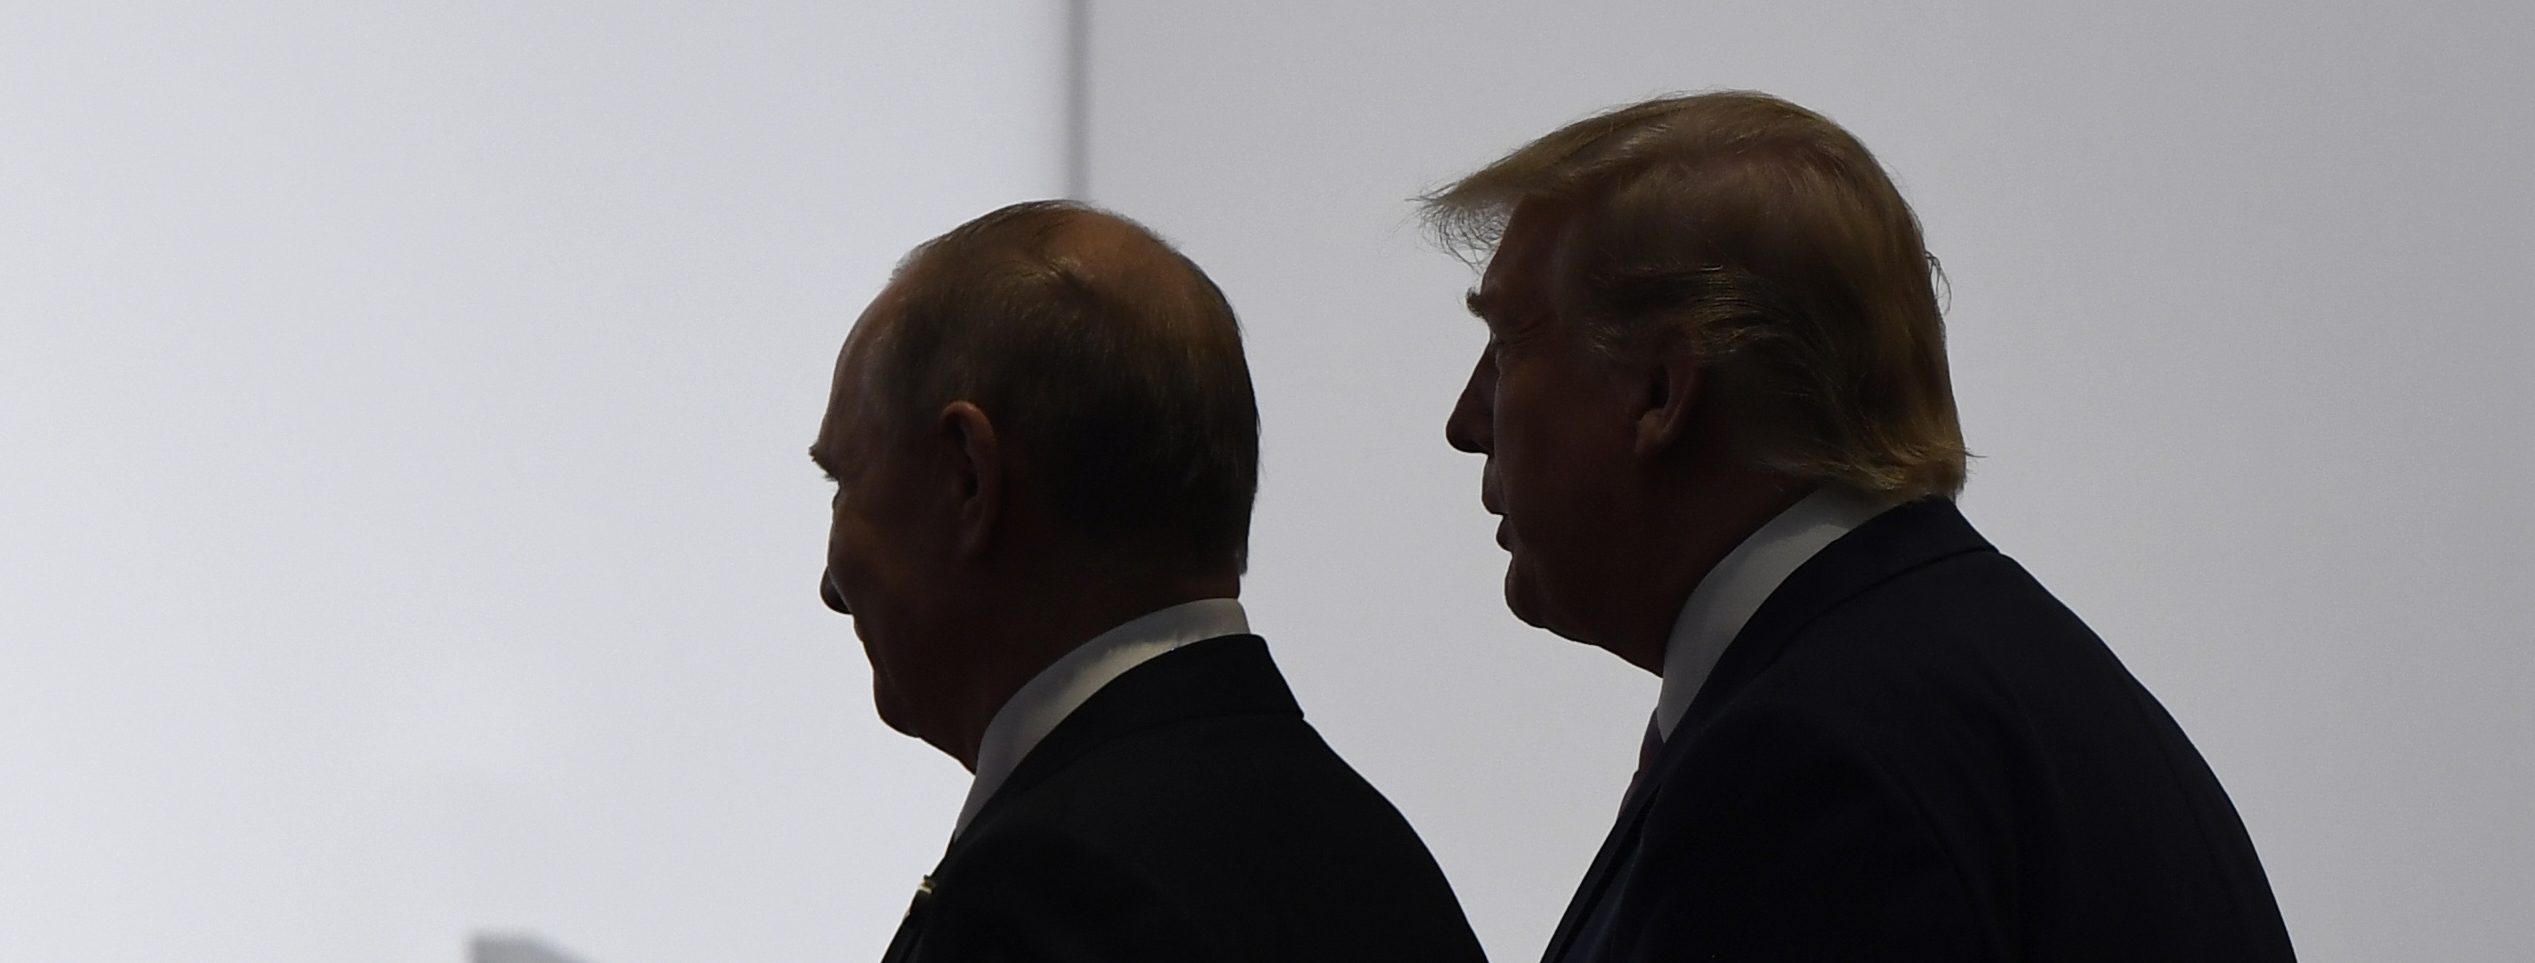 Vladimir Putin e Donald Trump (LaPresse)